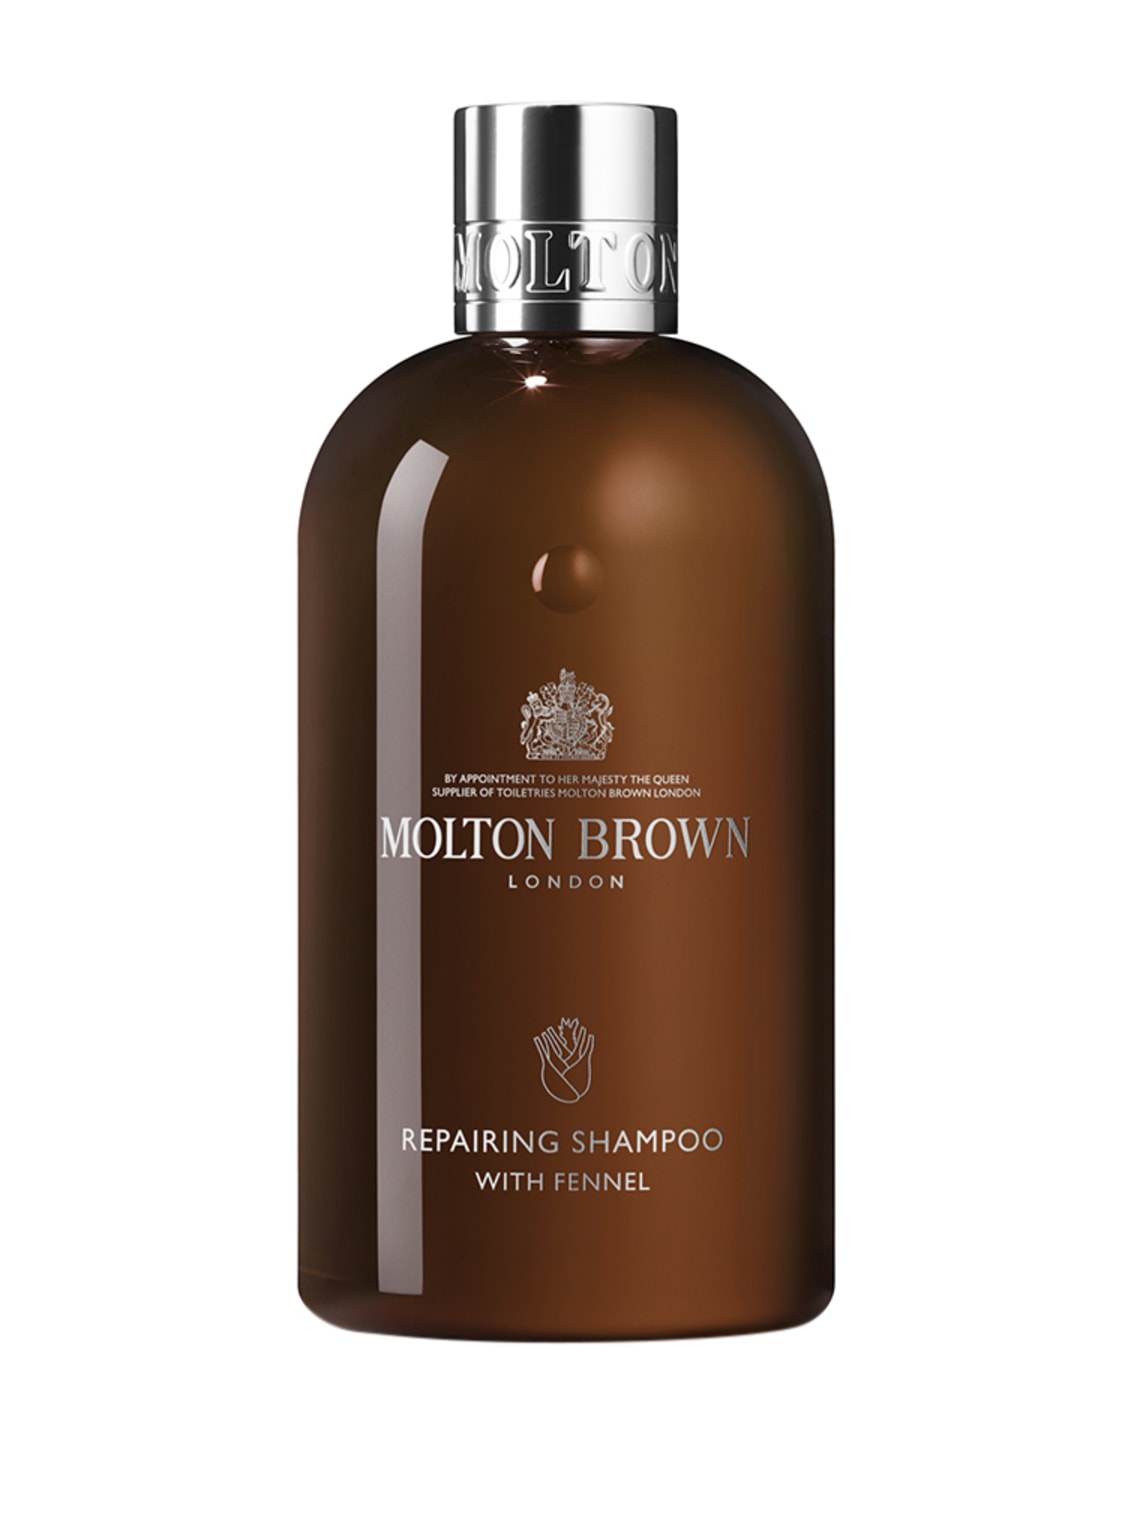 Molton Brown Repairing Shampoo With Fennel Shampoo 300 ml von MOLTON BROWN